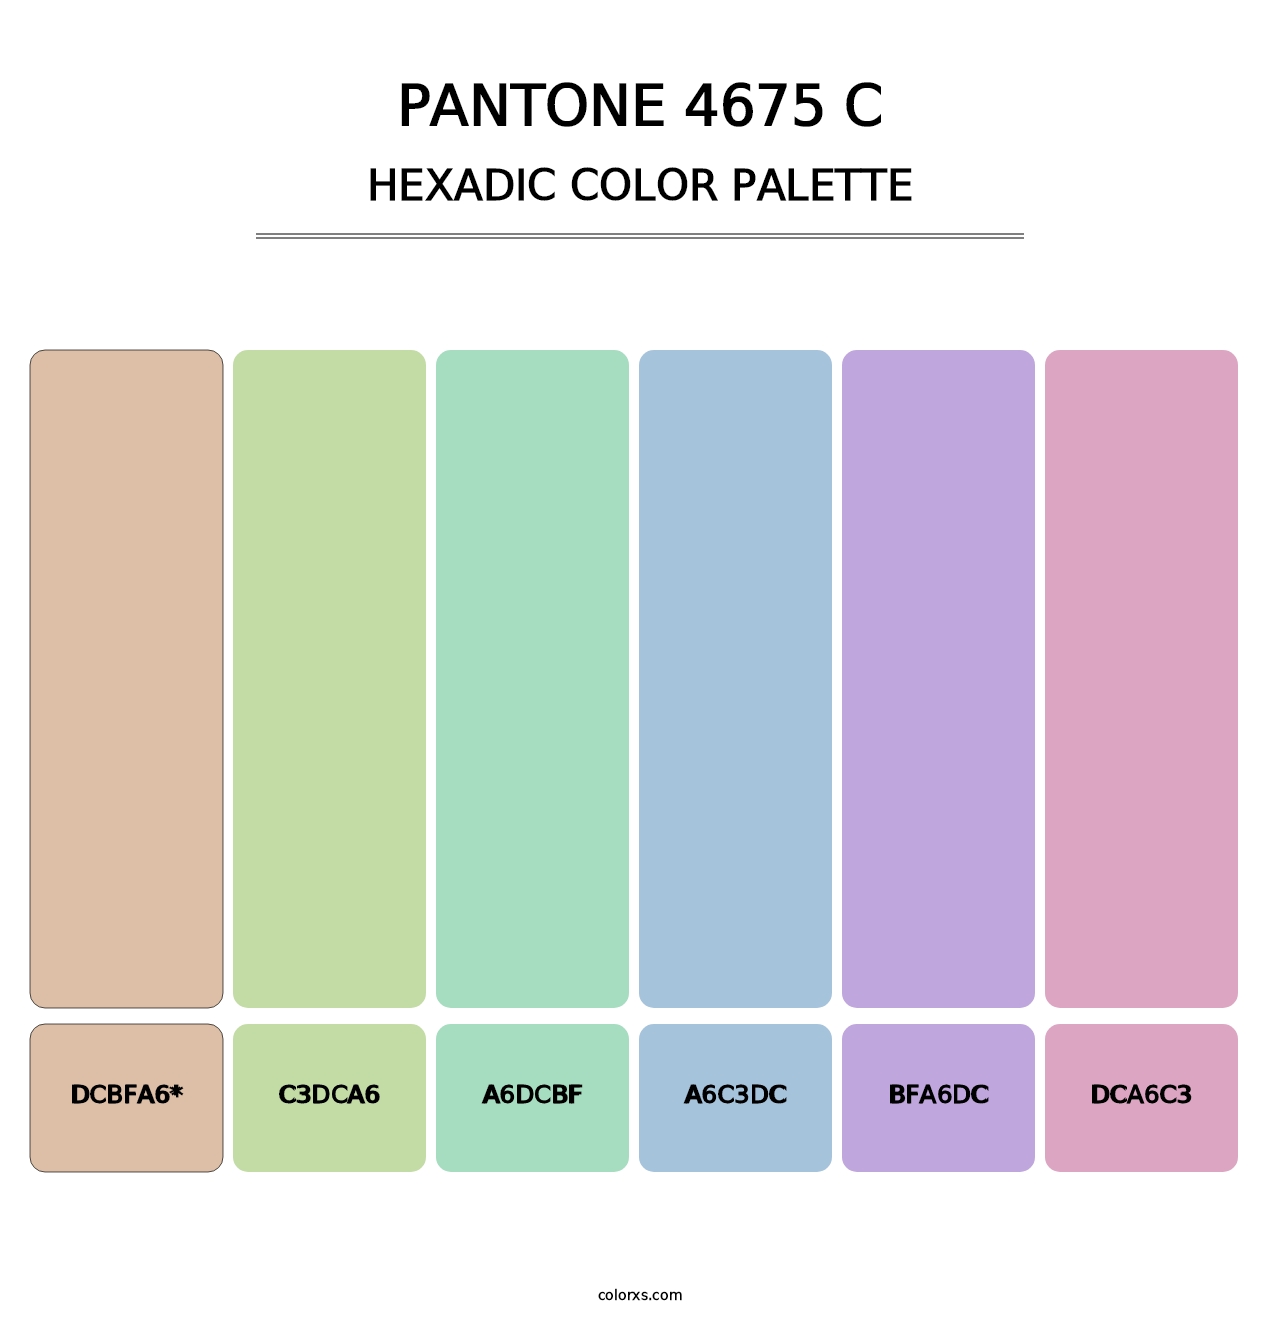 PANTONE 4675 C - Hexadic Color Palette